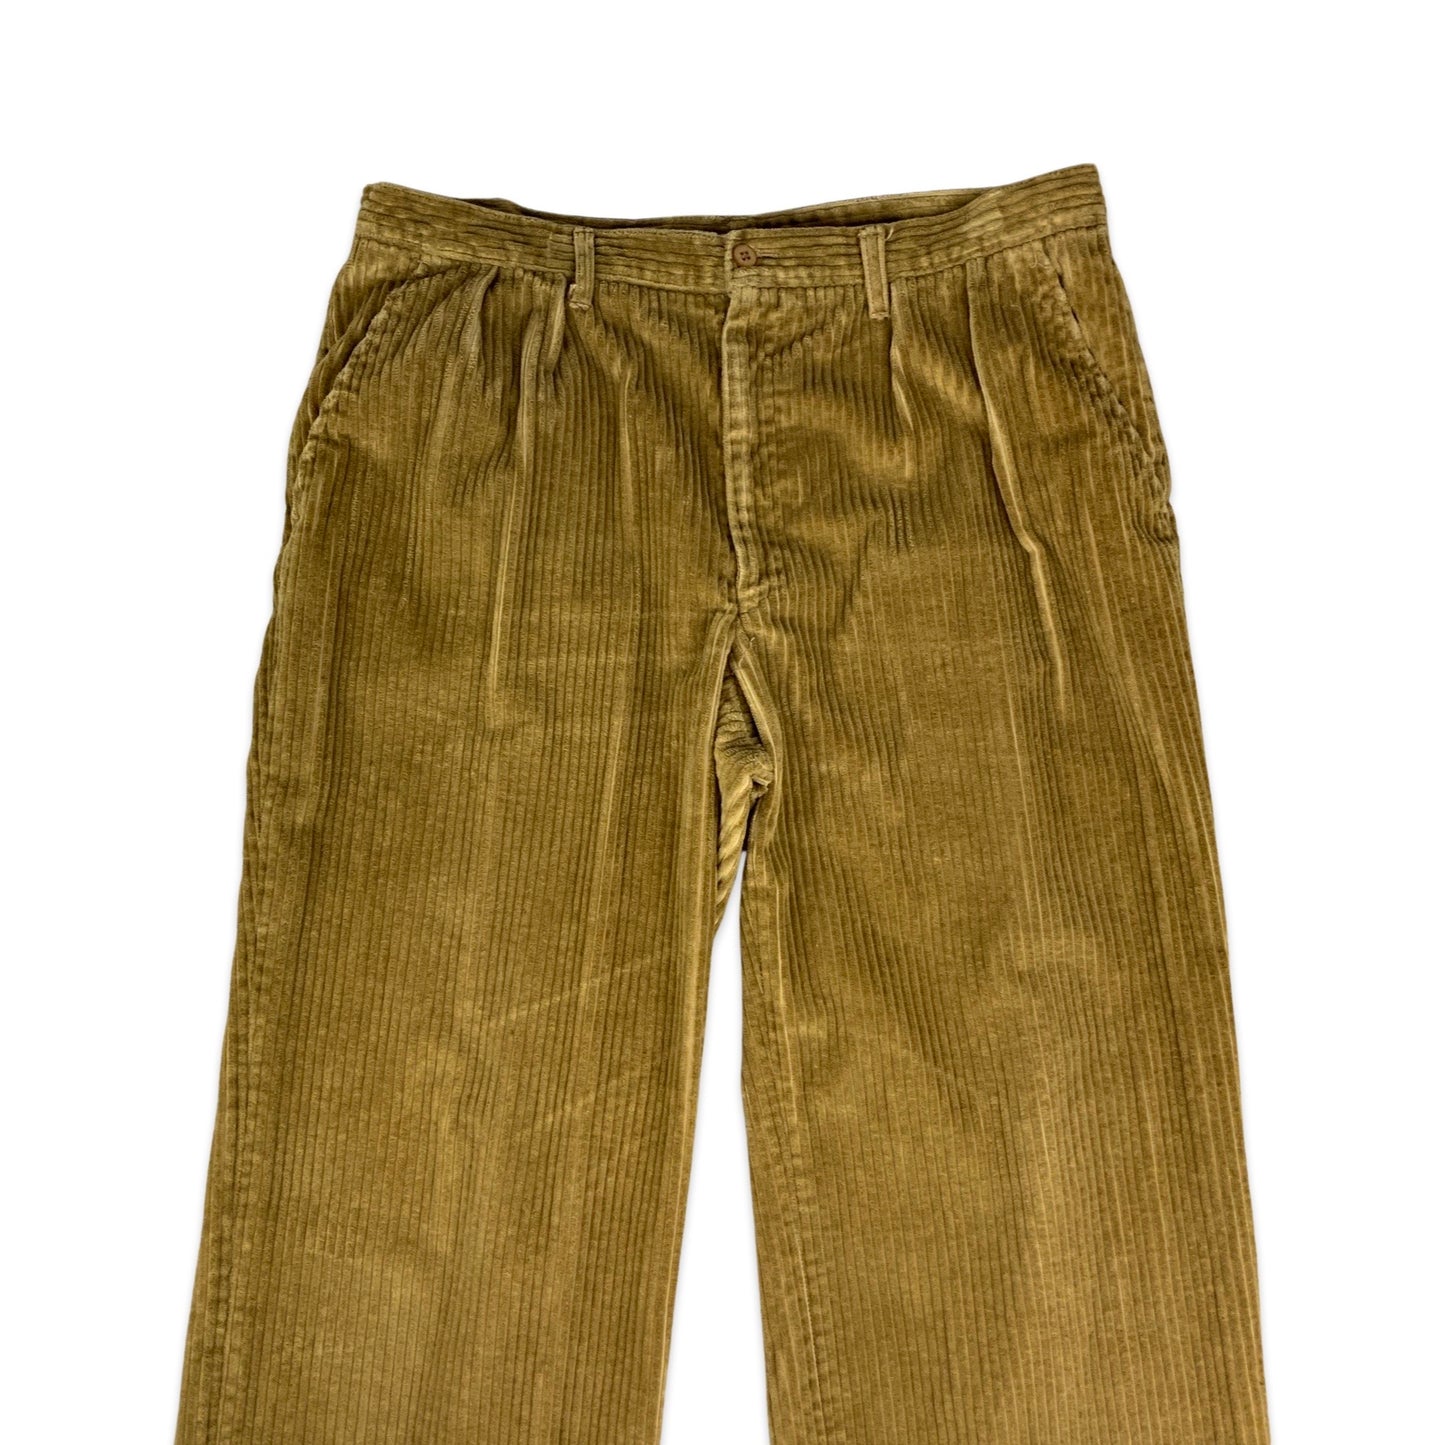 Vintage Beige Pleated Jumbo Cord Trousers 36W 32L